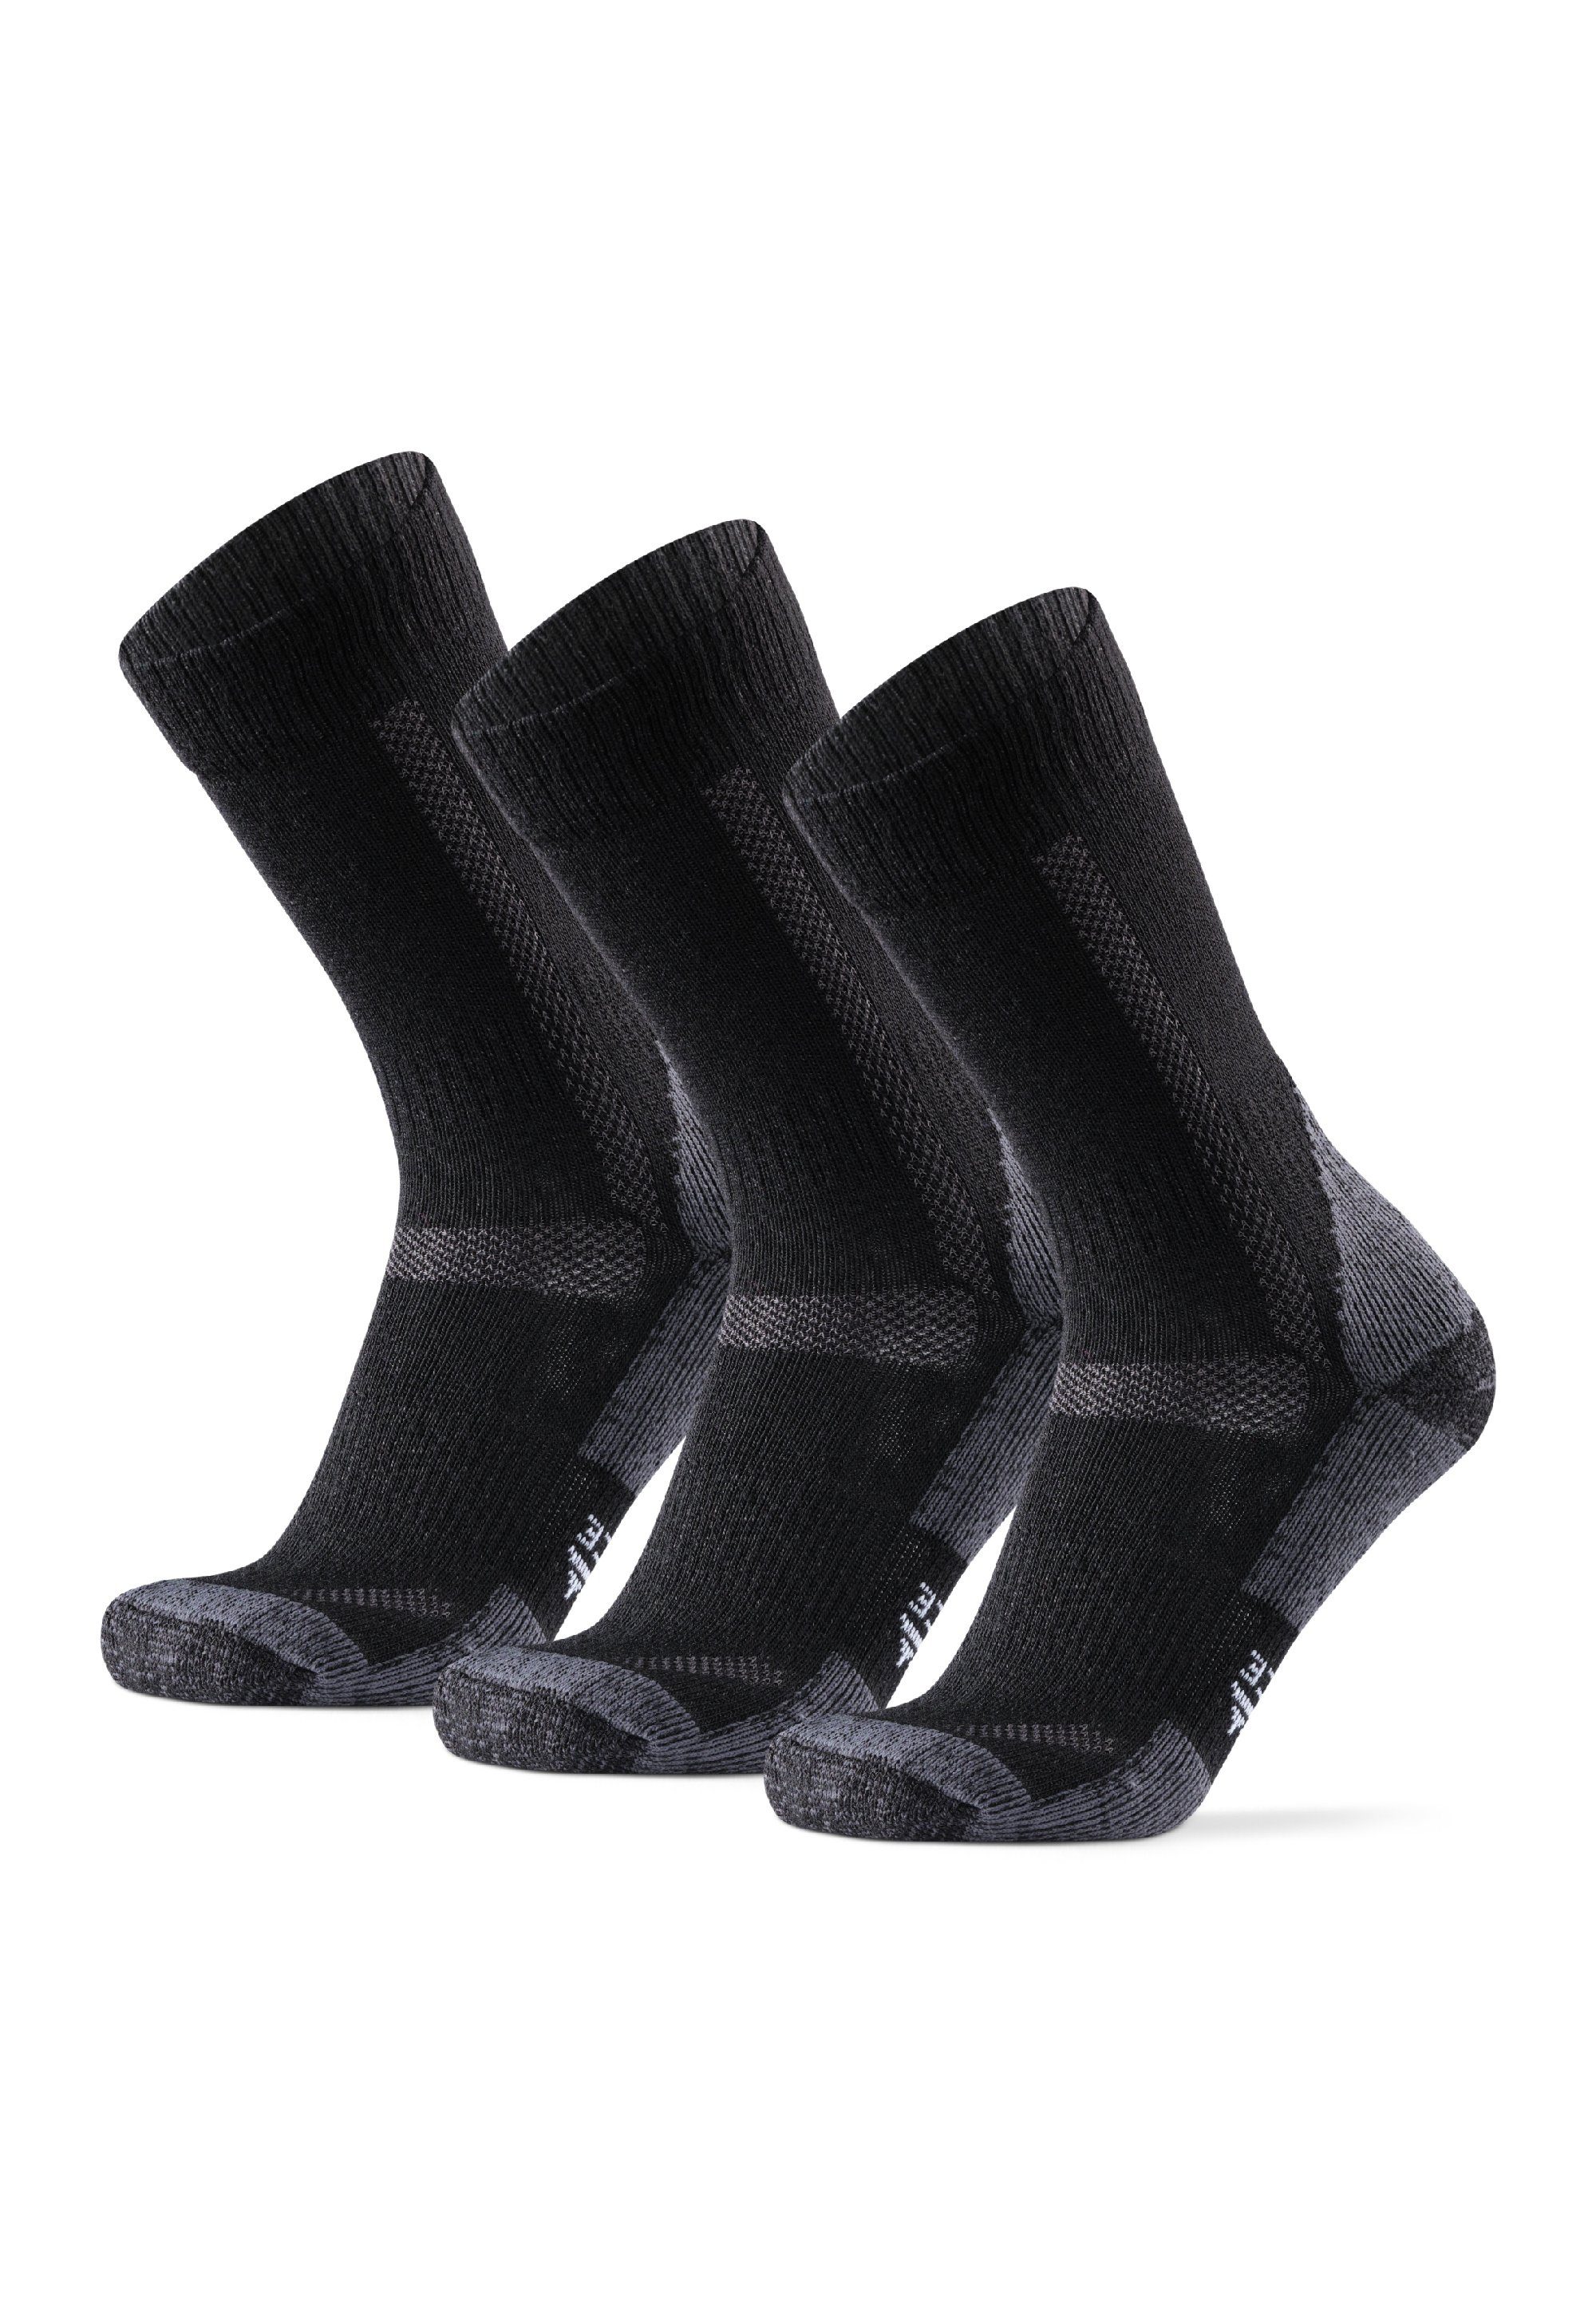 (Packung, DANISH Merino 3-Paar) Wandersocken Socks ENDURANCE & Kinder Anti-Blasen, für Hiking Black/Grey Damen Herren, Classic